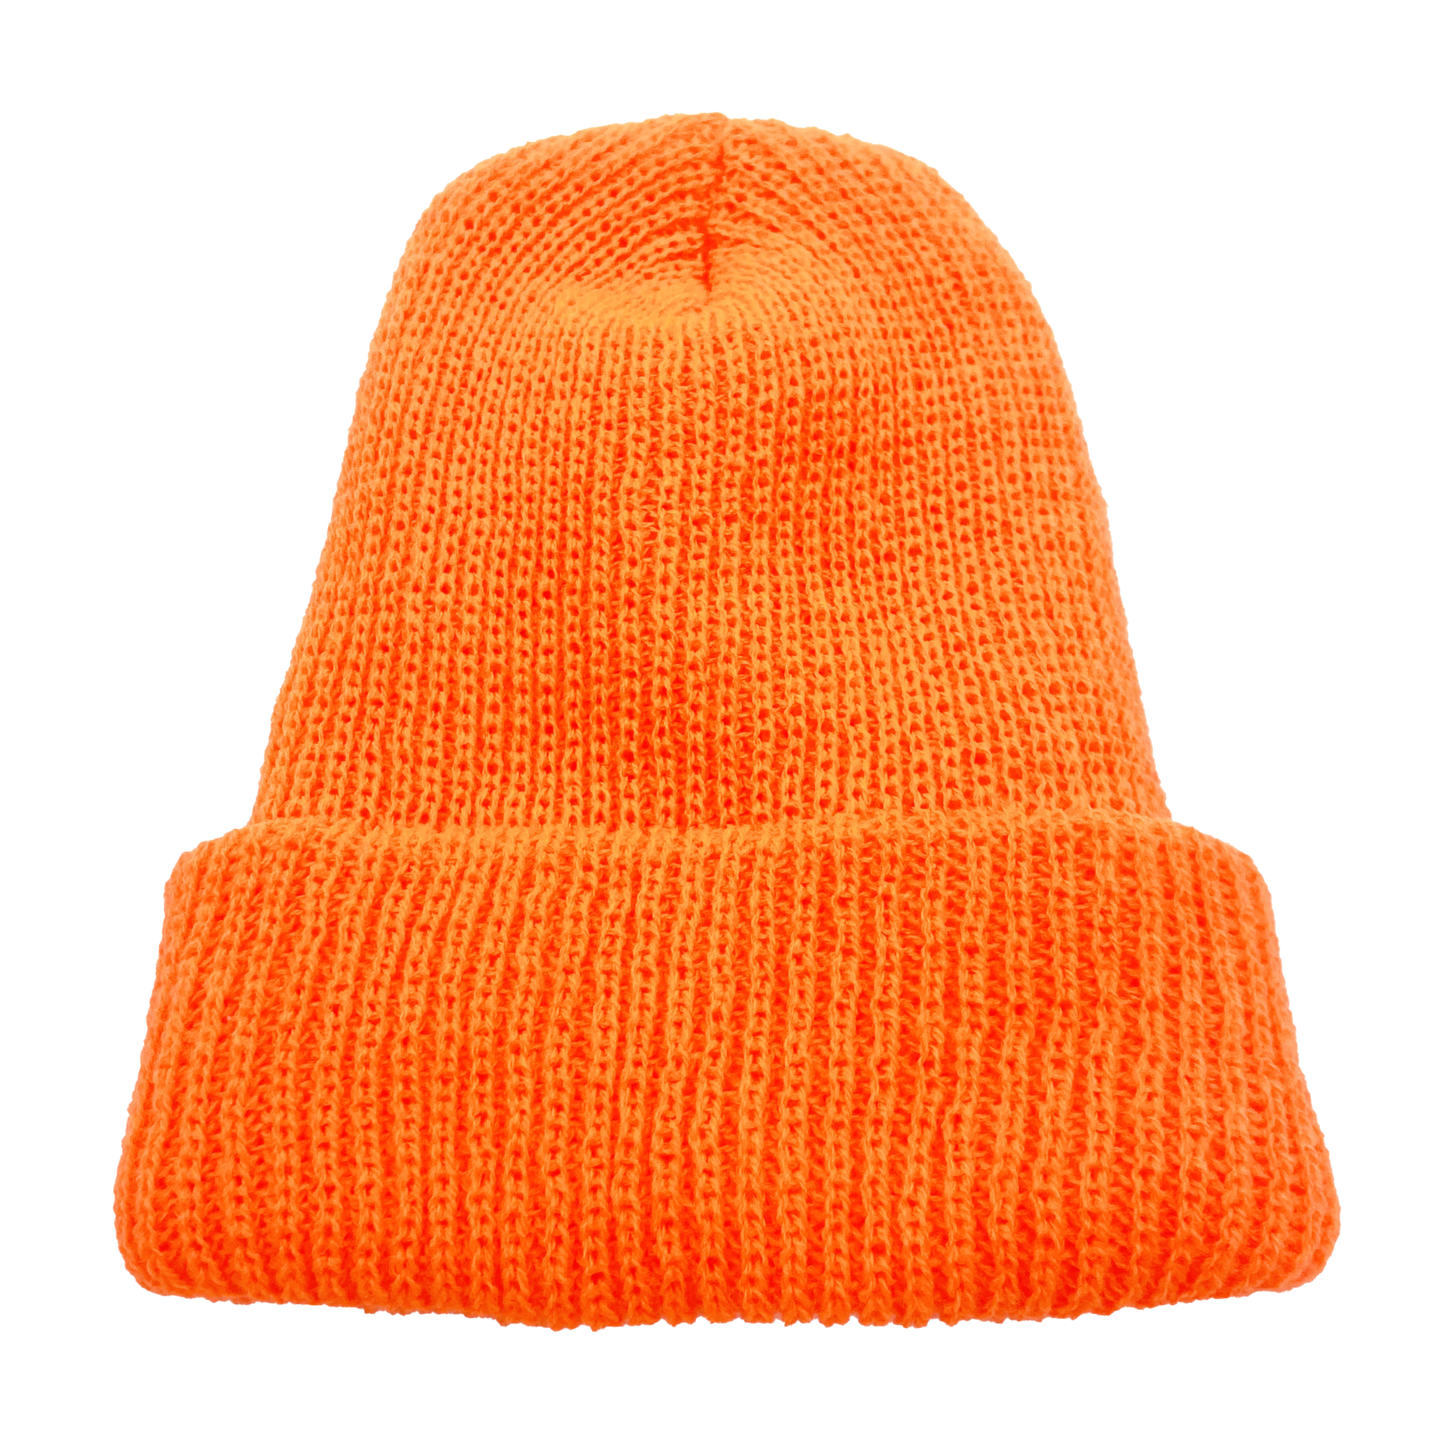 Stocking cap in blaze orange.